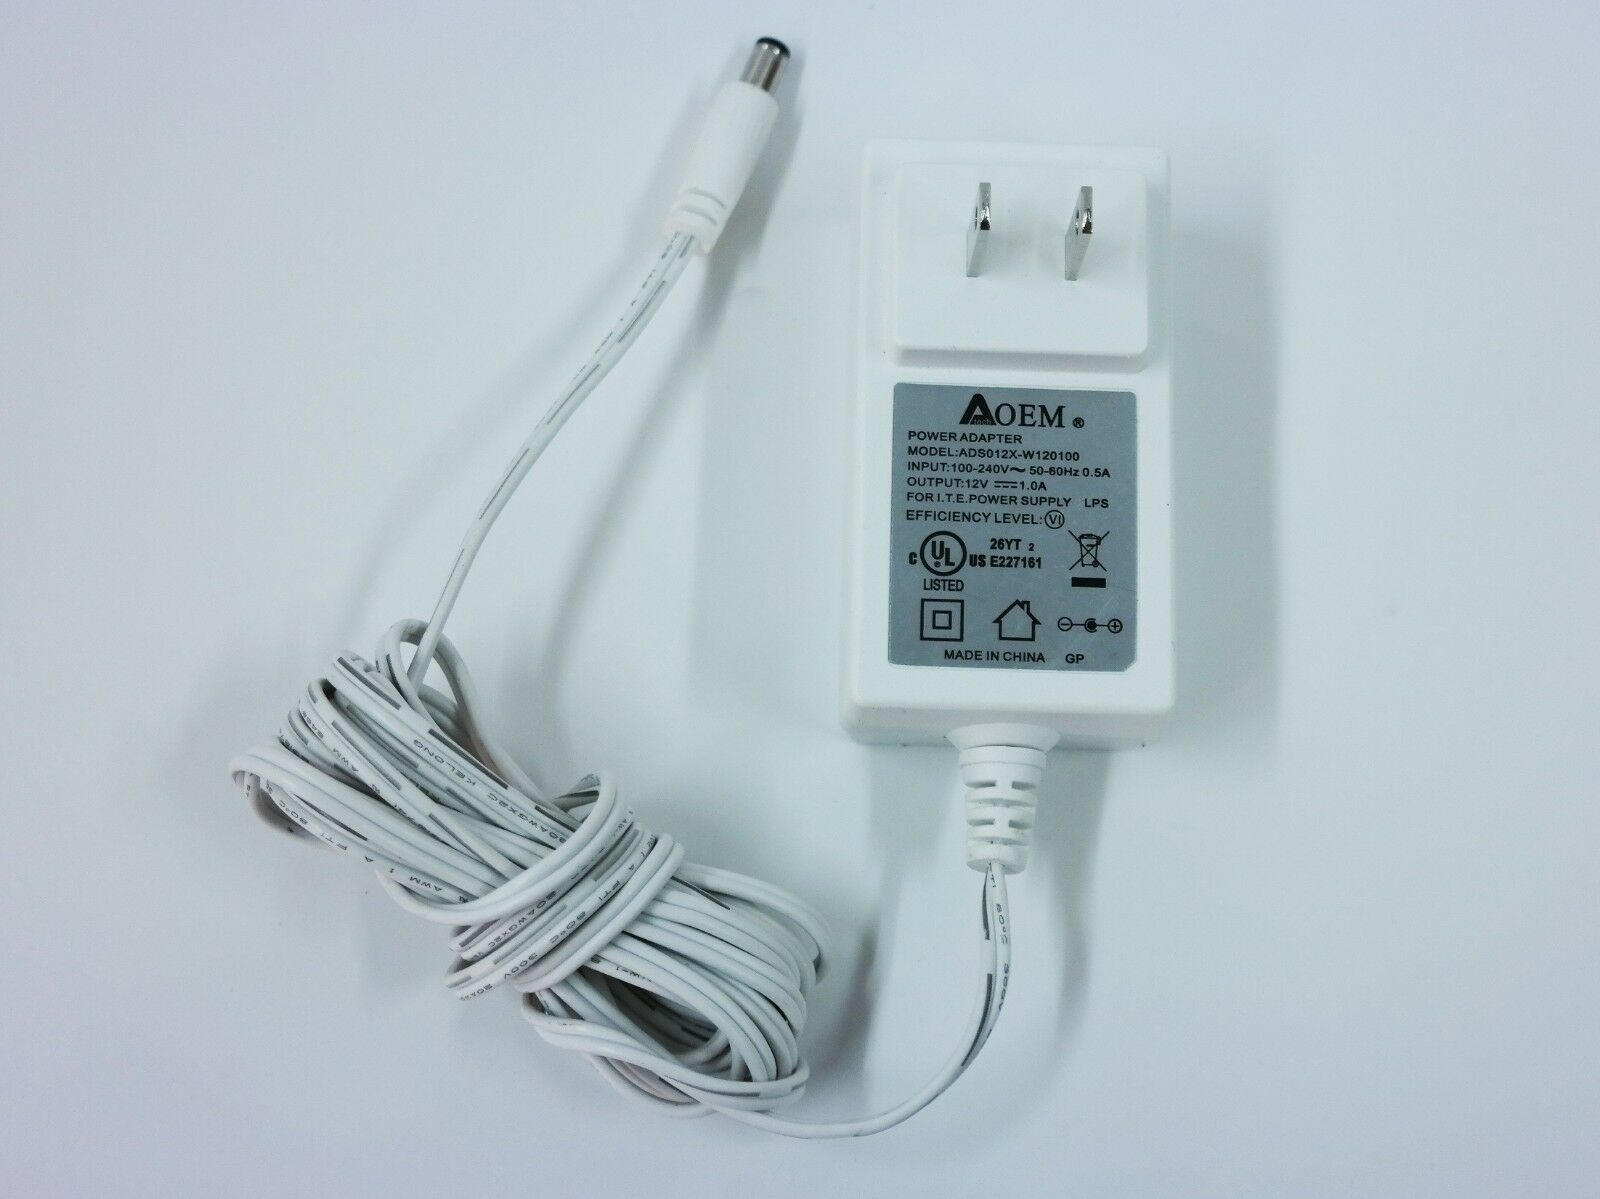 New ADSO12X-W120100 12V 1.0A AC Adapter FOR I.T.E.Power Supply Specification: Brand:OEM MODEL:ADS